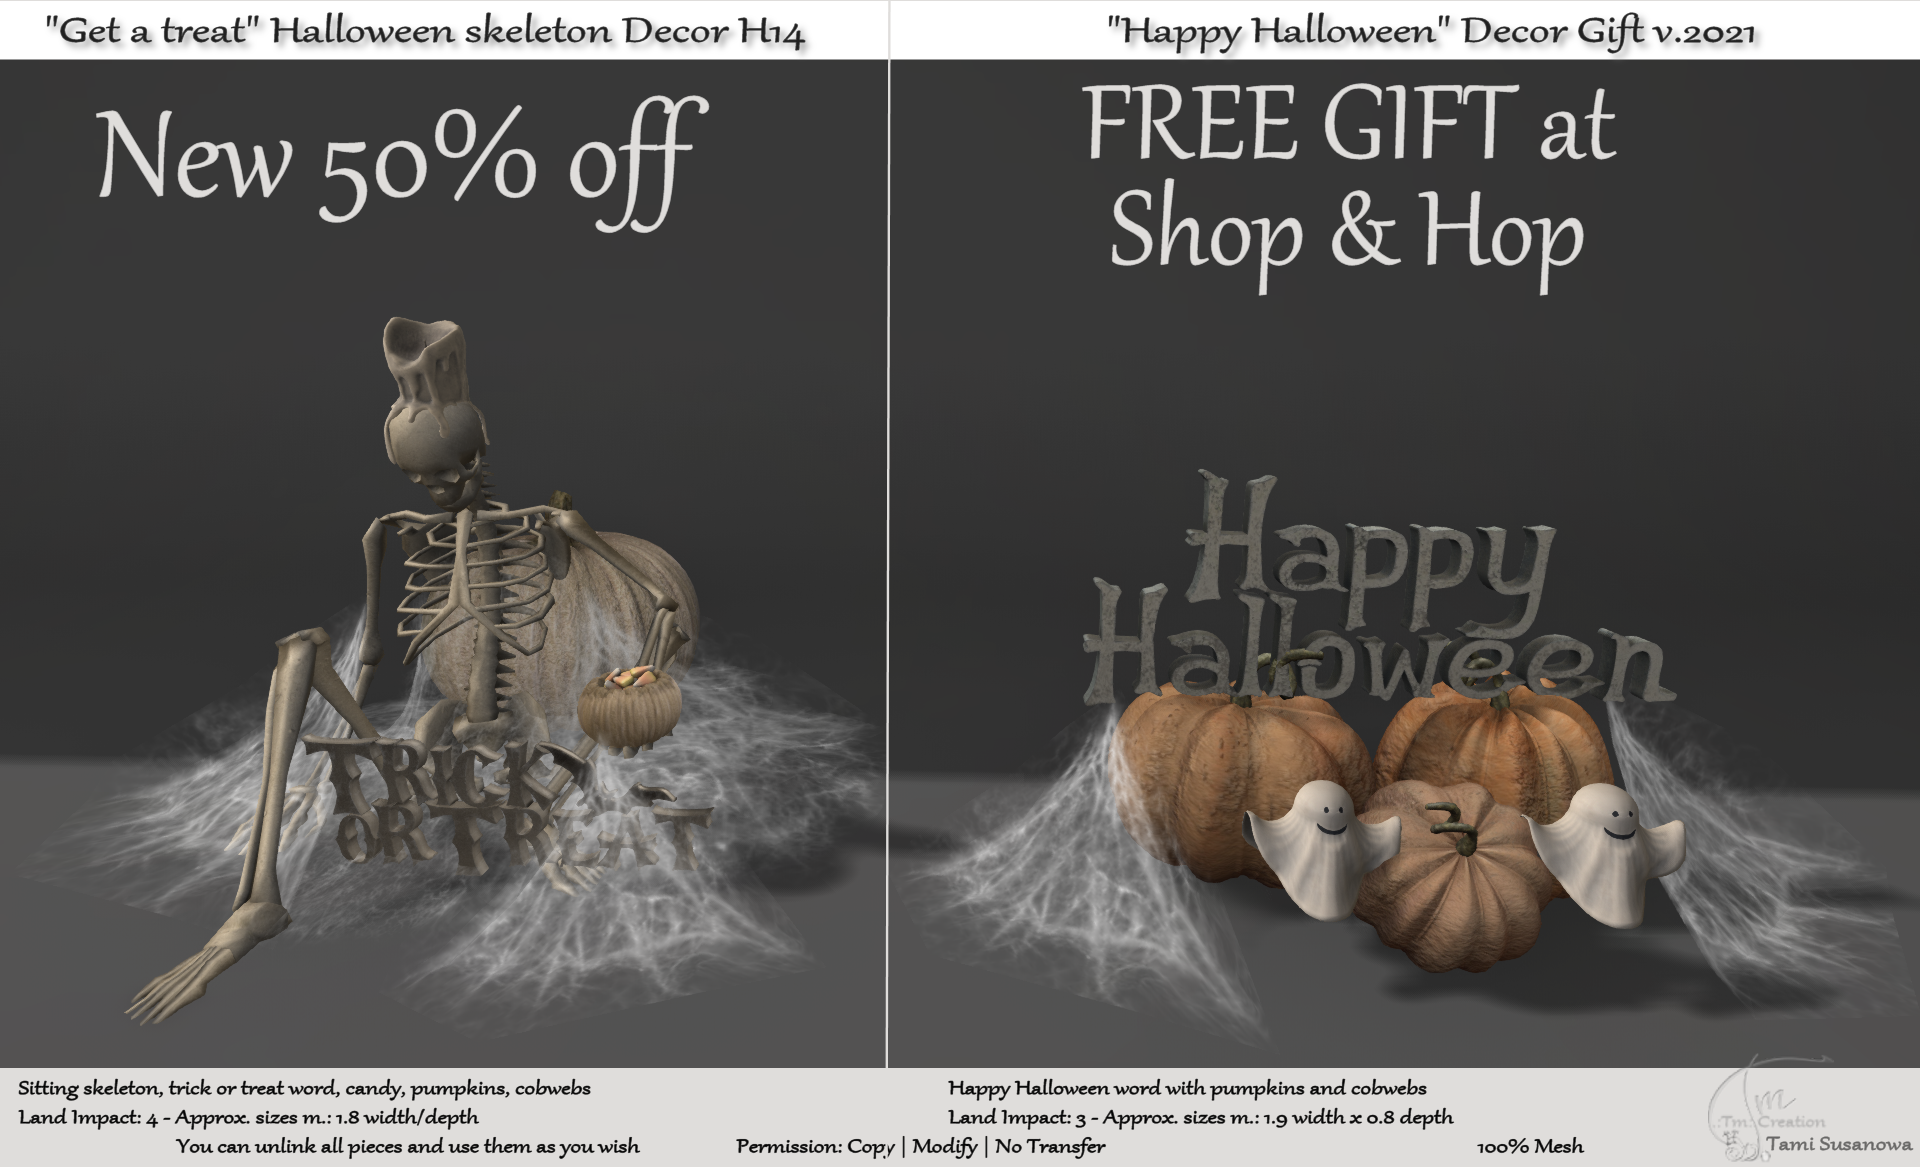 TM Creation – Get A Treat Halloween Skeleton Decor H14